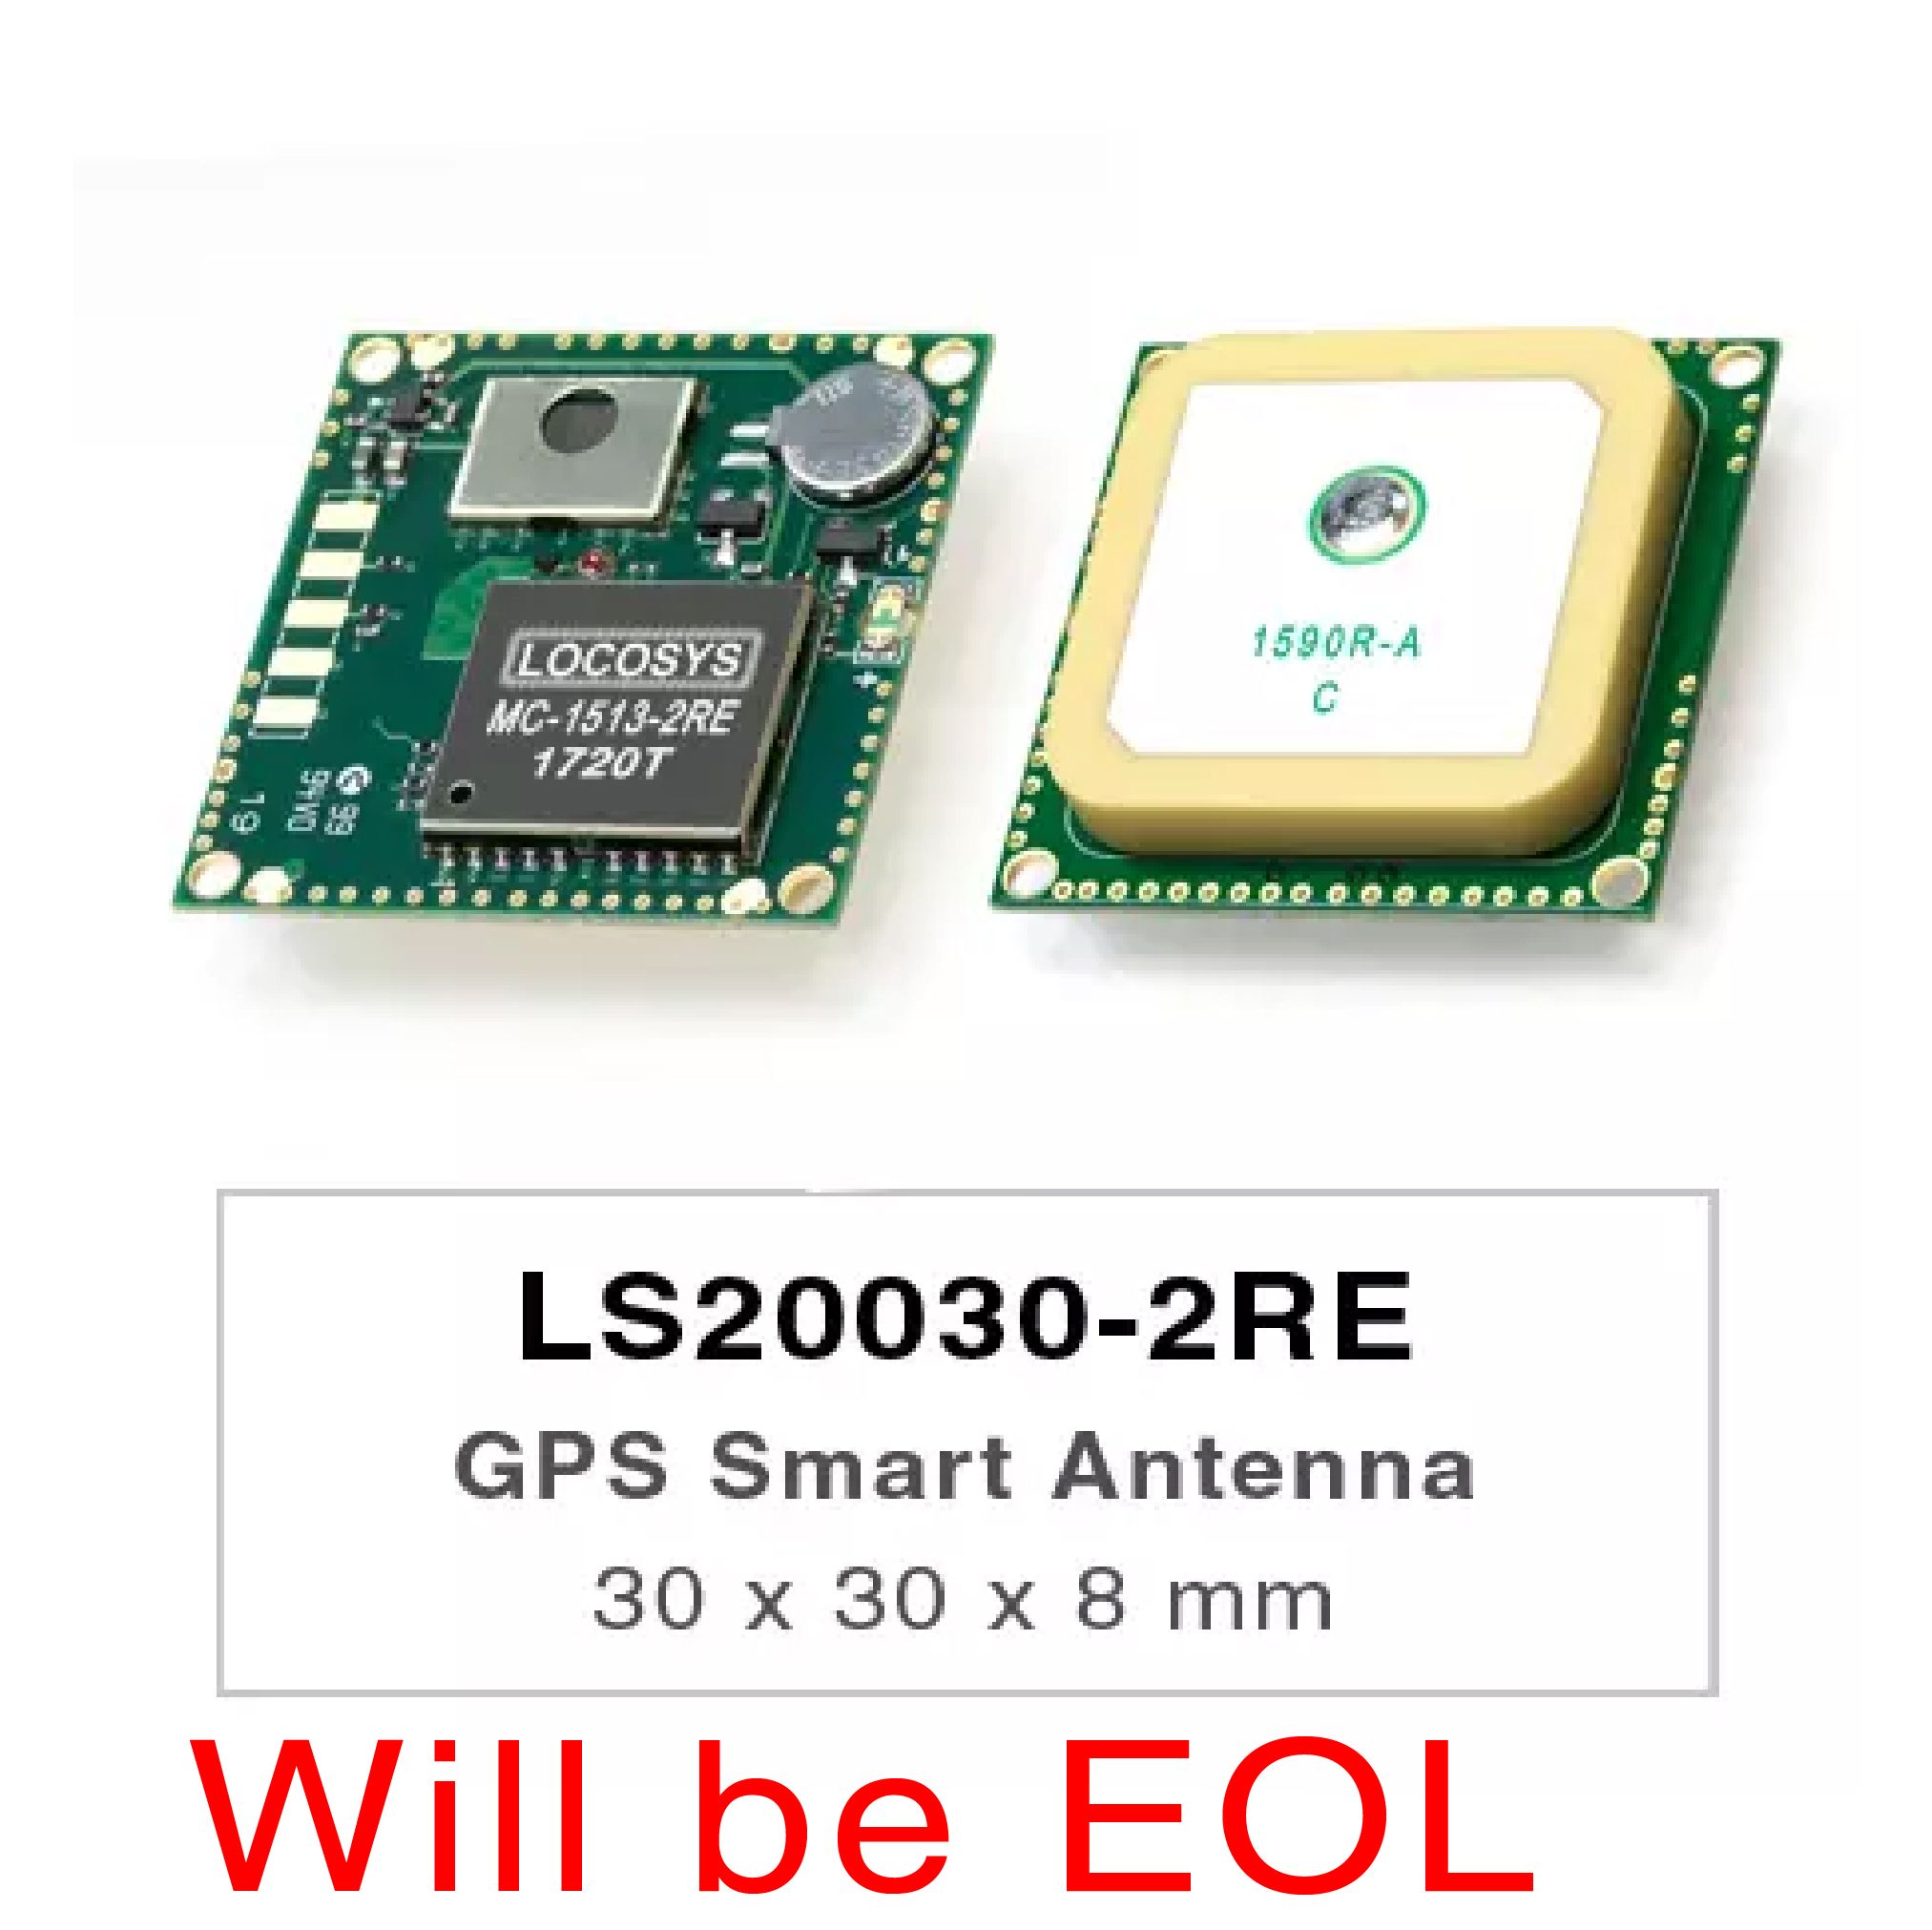 LS20030~2-2RE系列产品为GPS天线接收器，包括嵌入式天线和GPS接收电路，多为OEM应用设计。